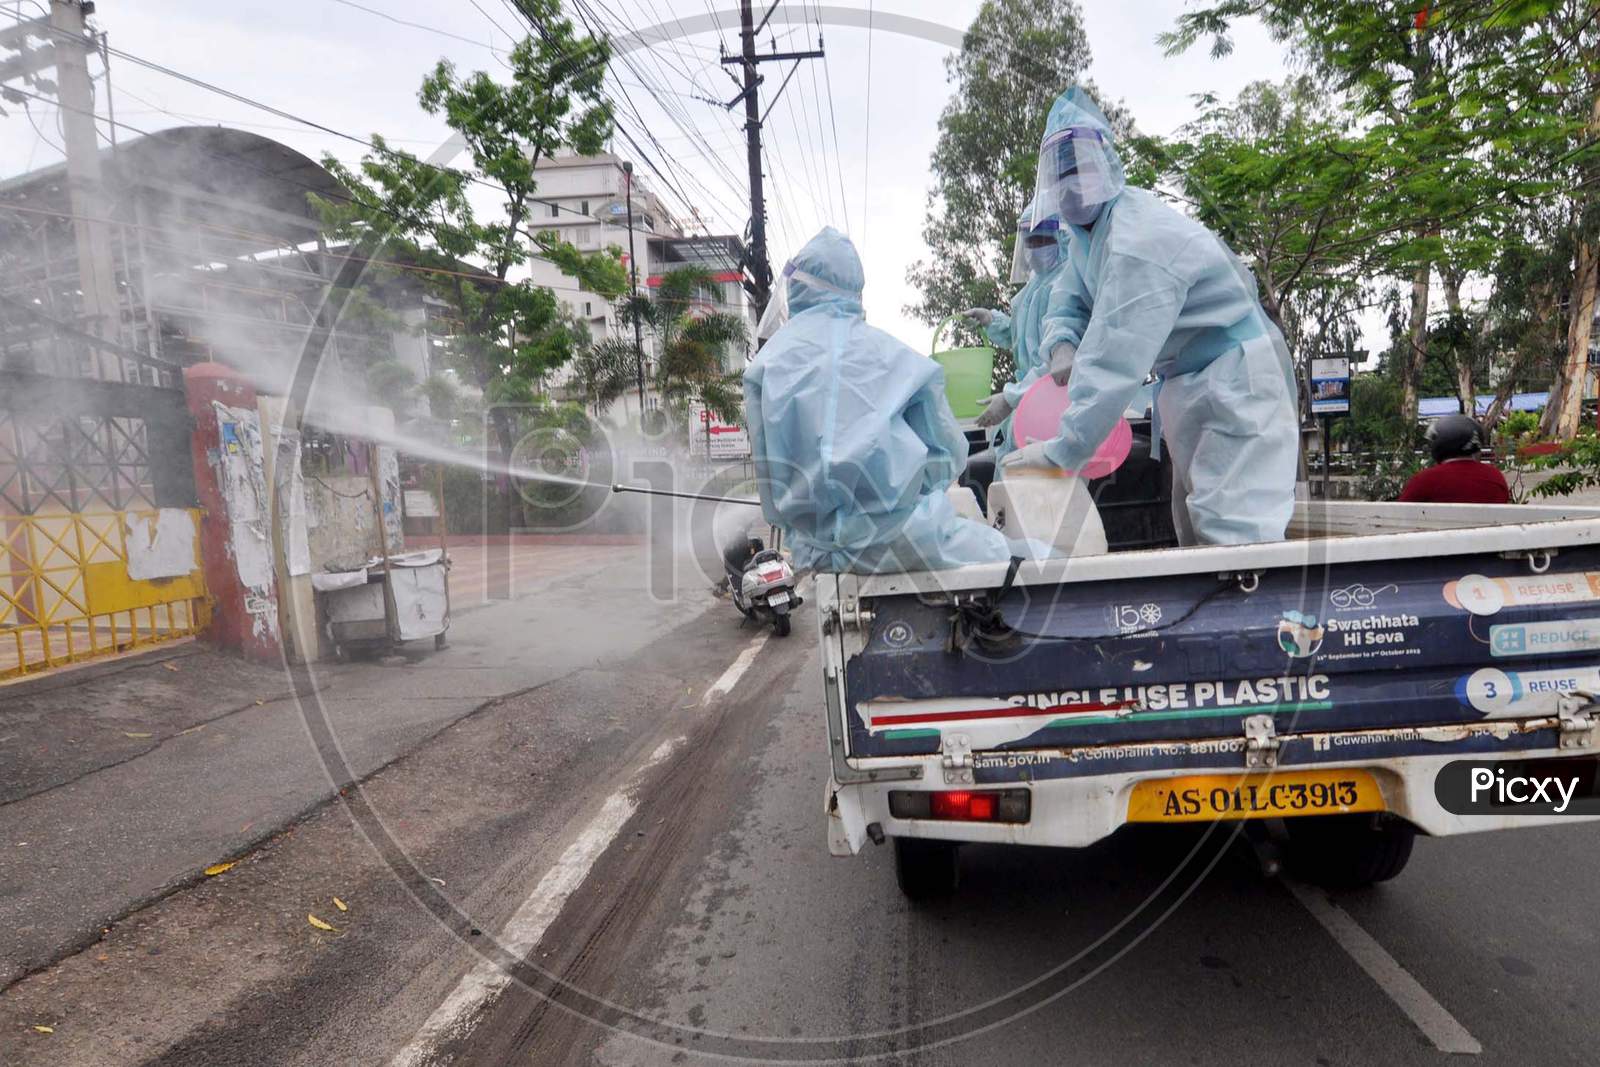 Guwahati Municipal Corporation (Gmc) Workers Spray Disinfectants During Nationwide Lockdown Amidst Coronavirus Or COVID-19 Pandemic  In Guwahati On May 11, 2020